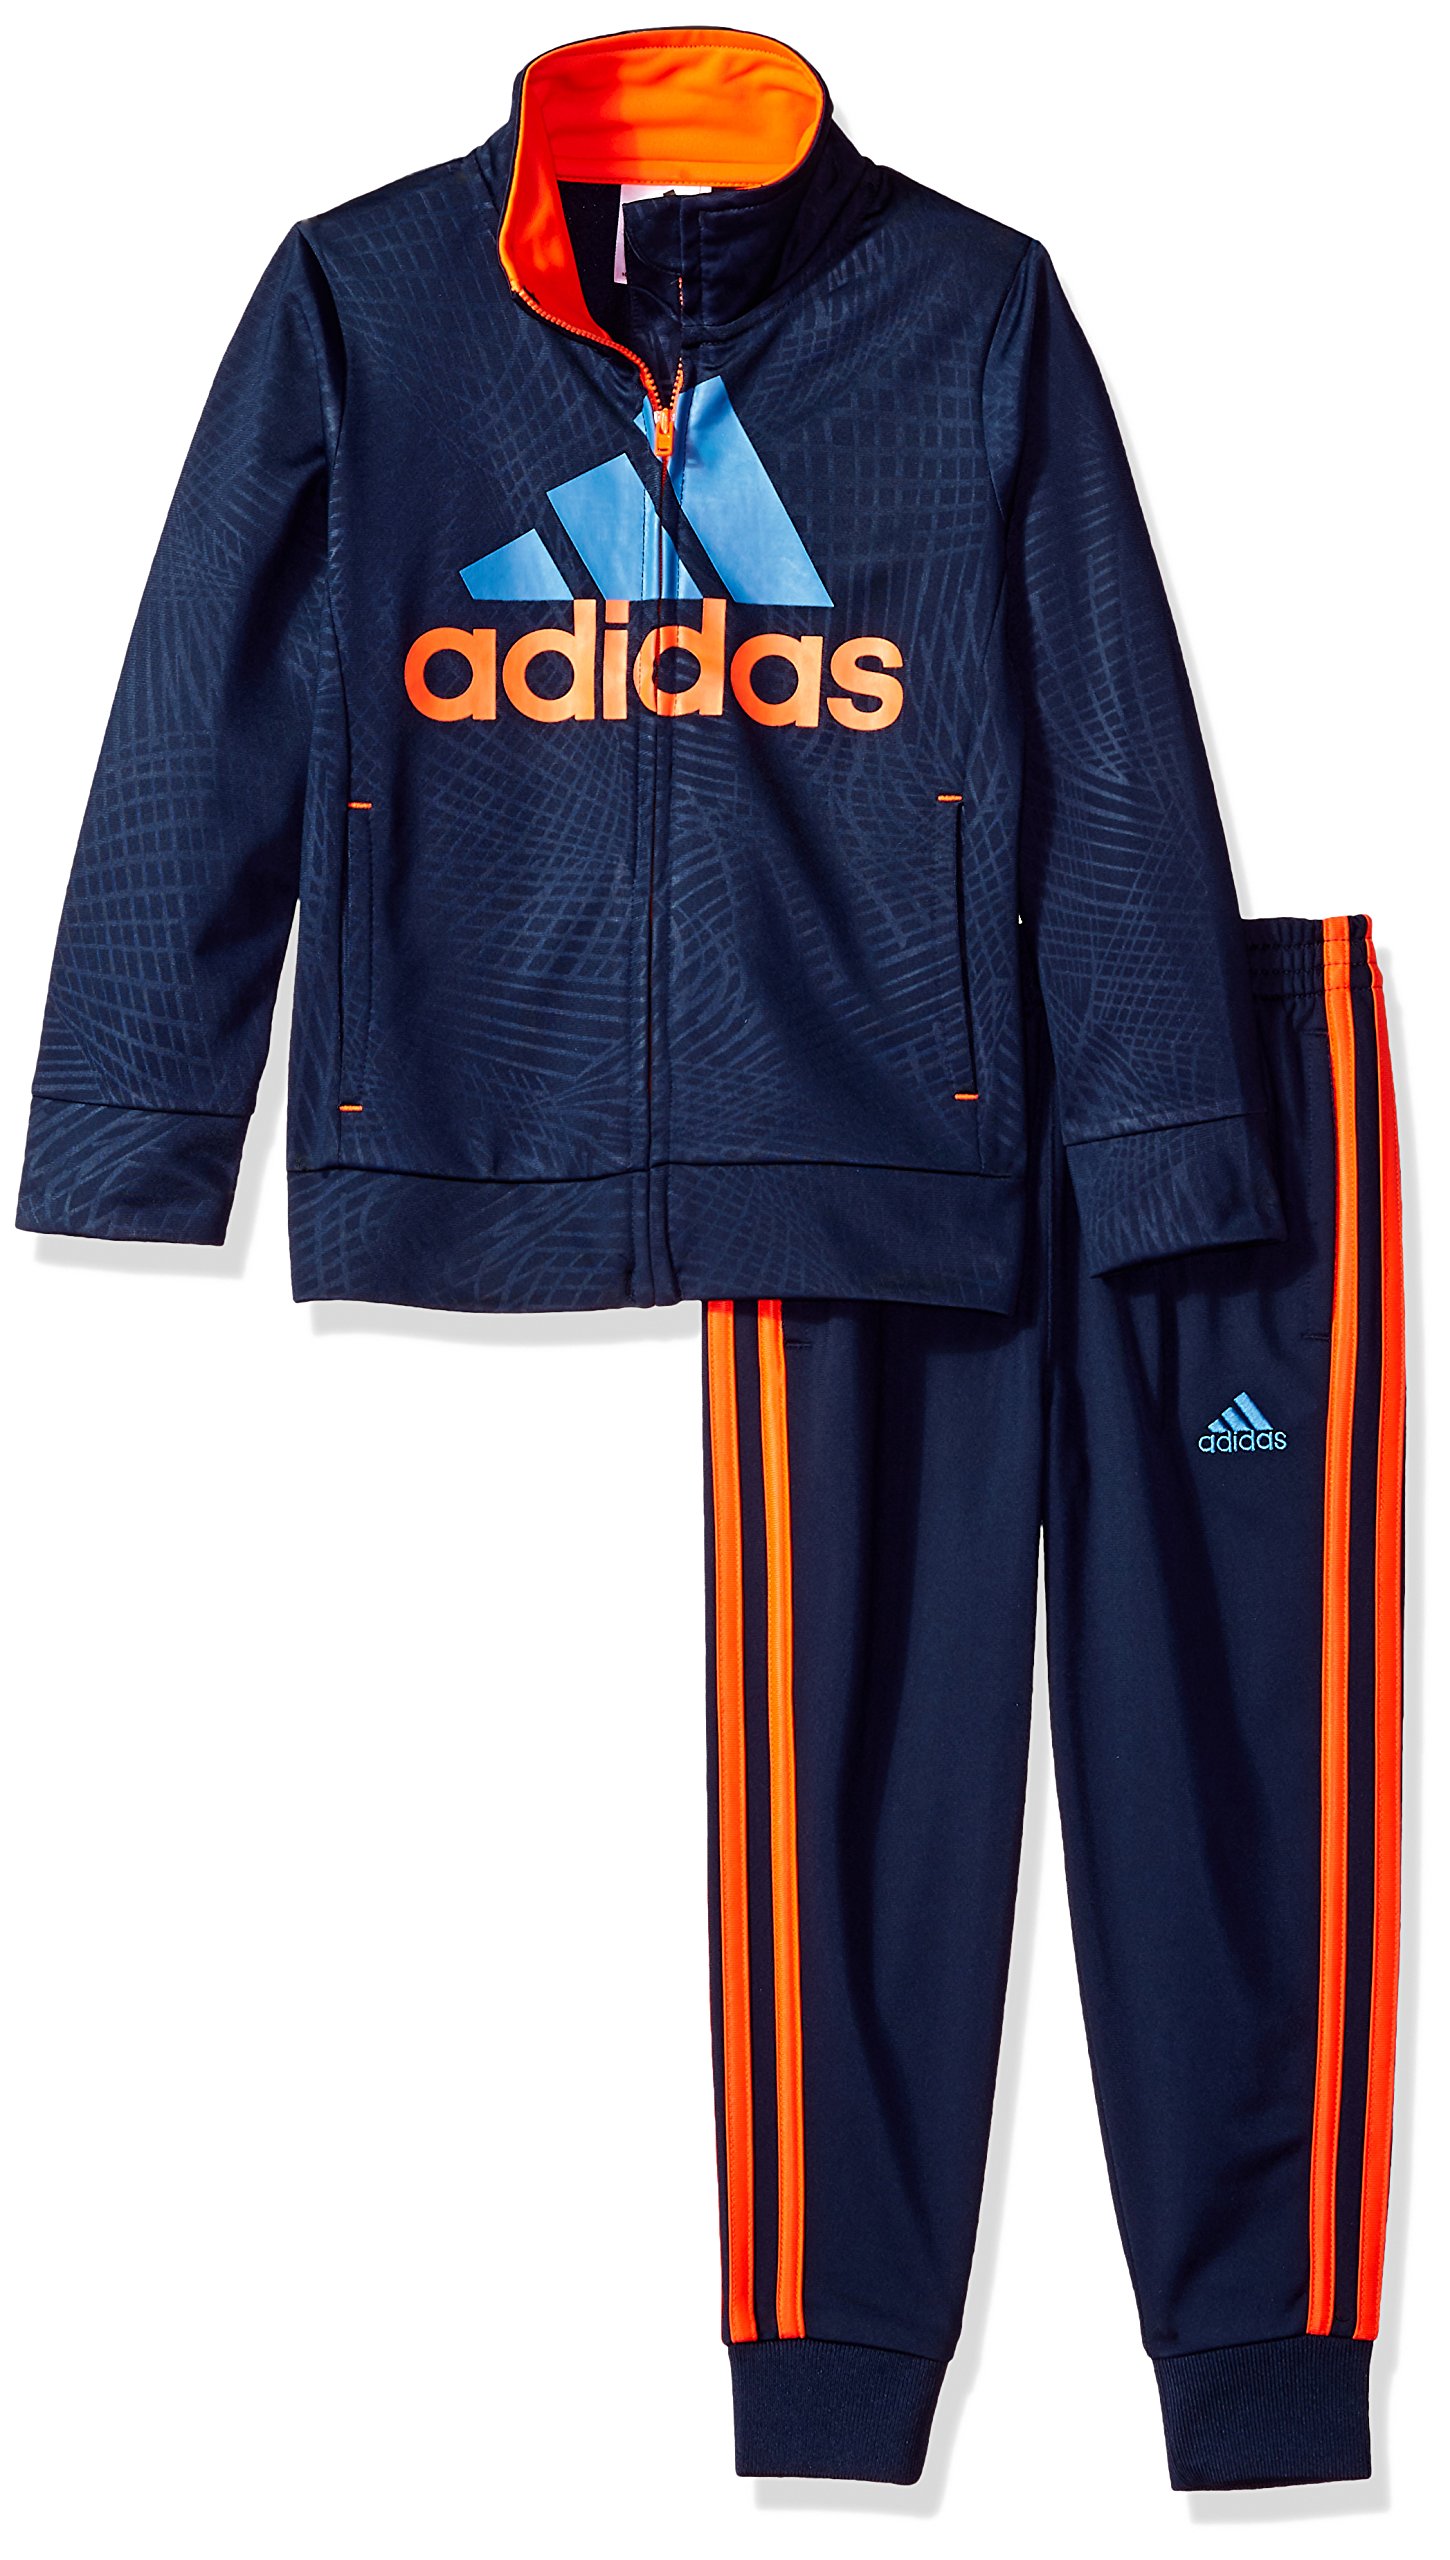 adidas Boys' Tricot Jacket and Pant Set